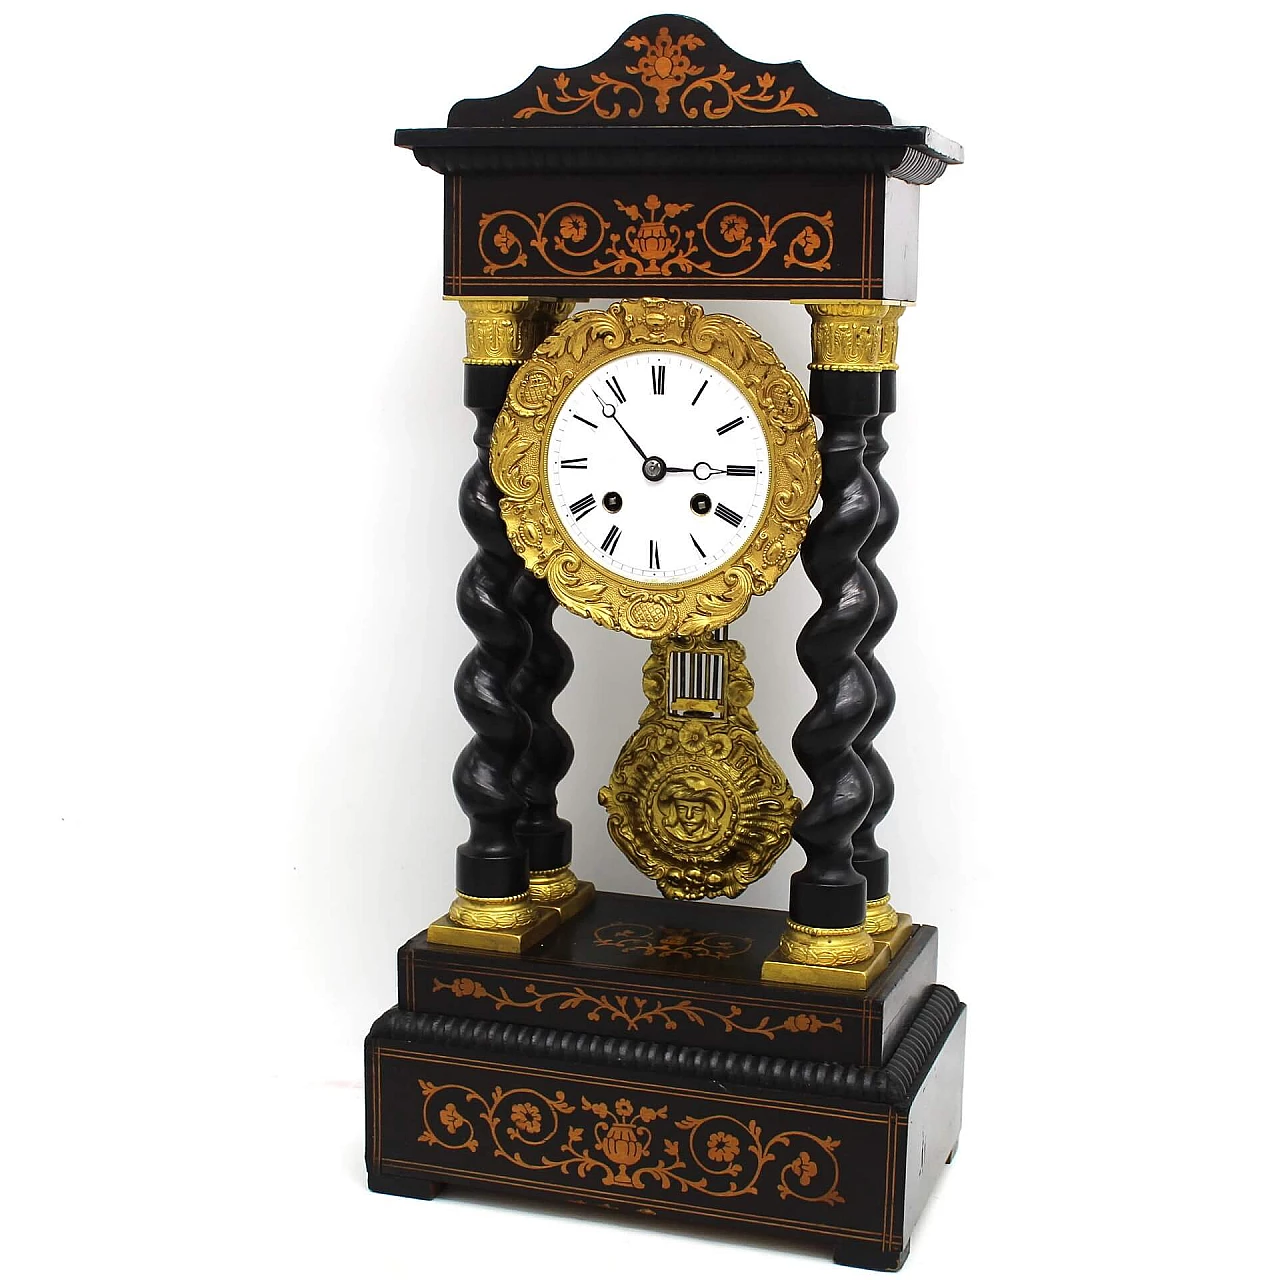 Napoleon III pendulum clock in inlaid ebonized wood and bronze, 19th century 1254234